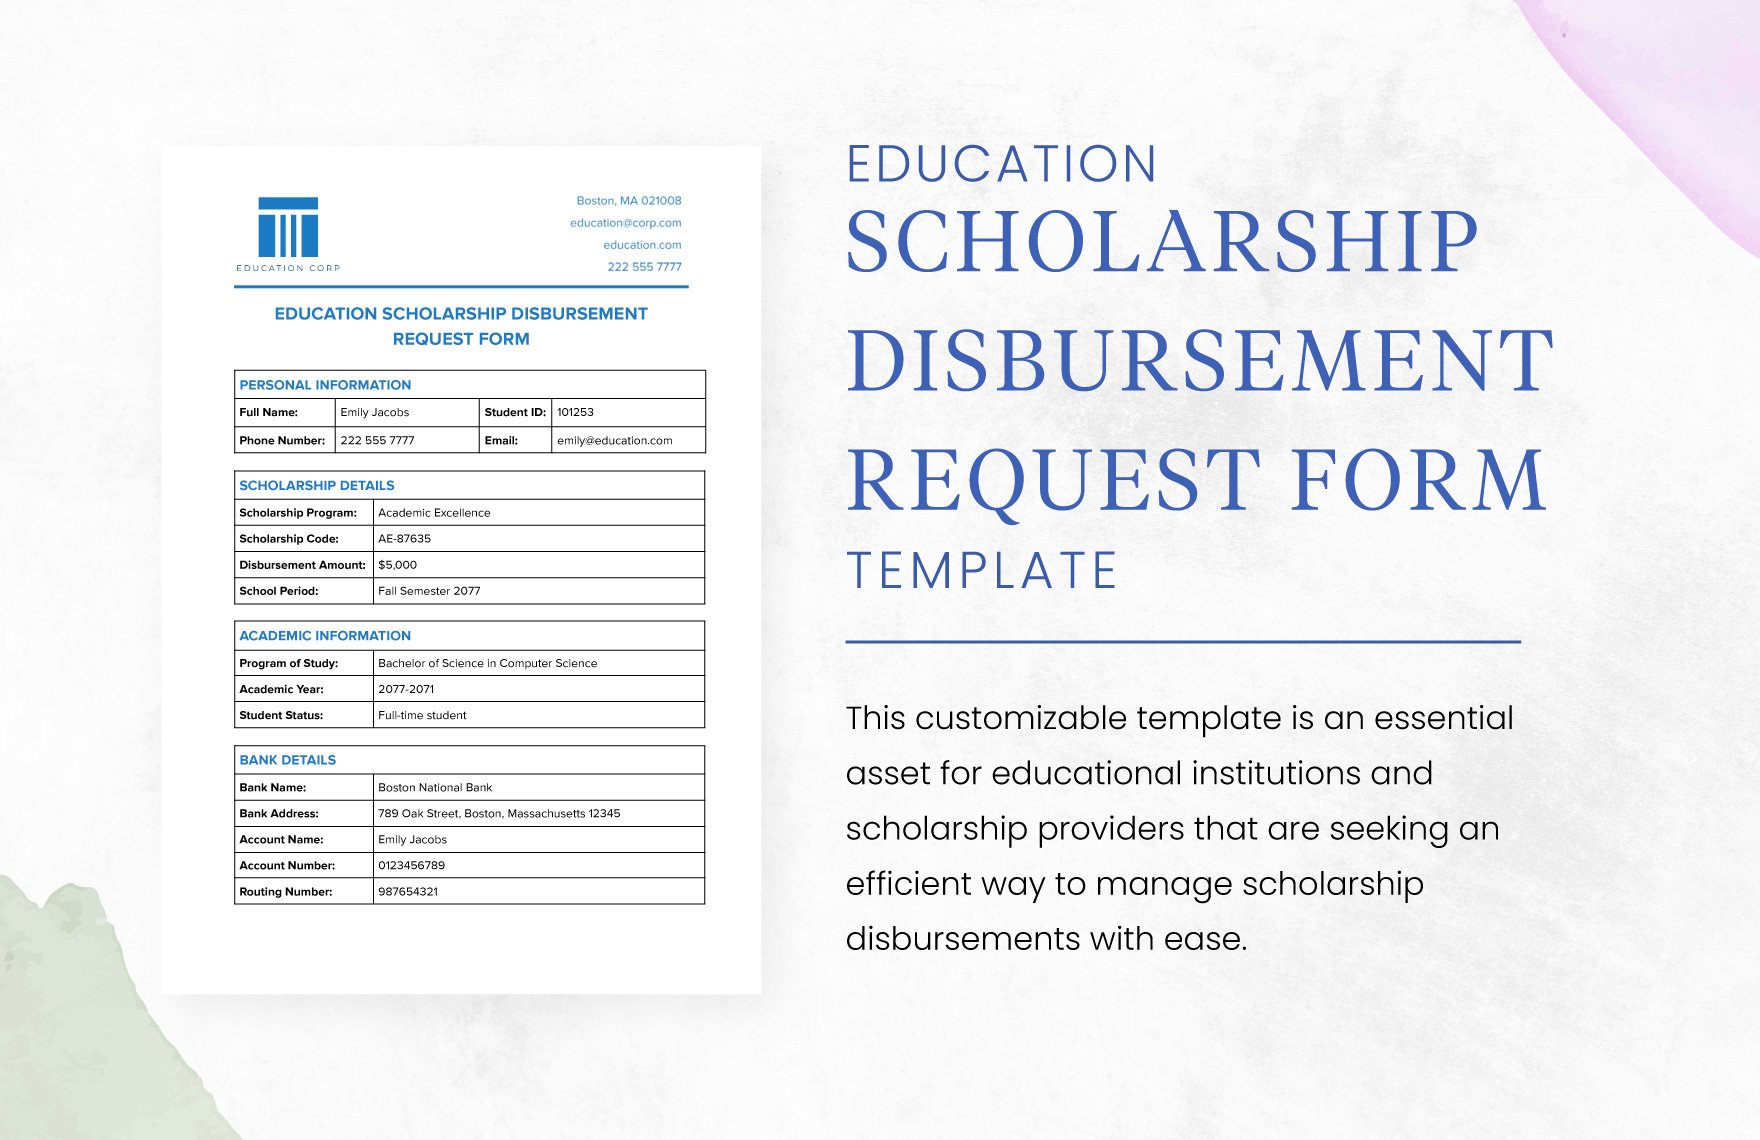 Education Scholarship Disbursement Request Form Template in Word, Google Docs, PDF